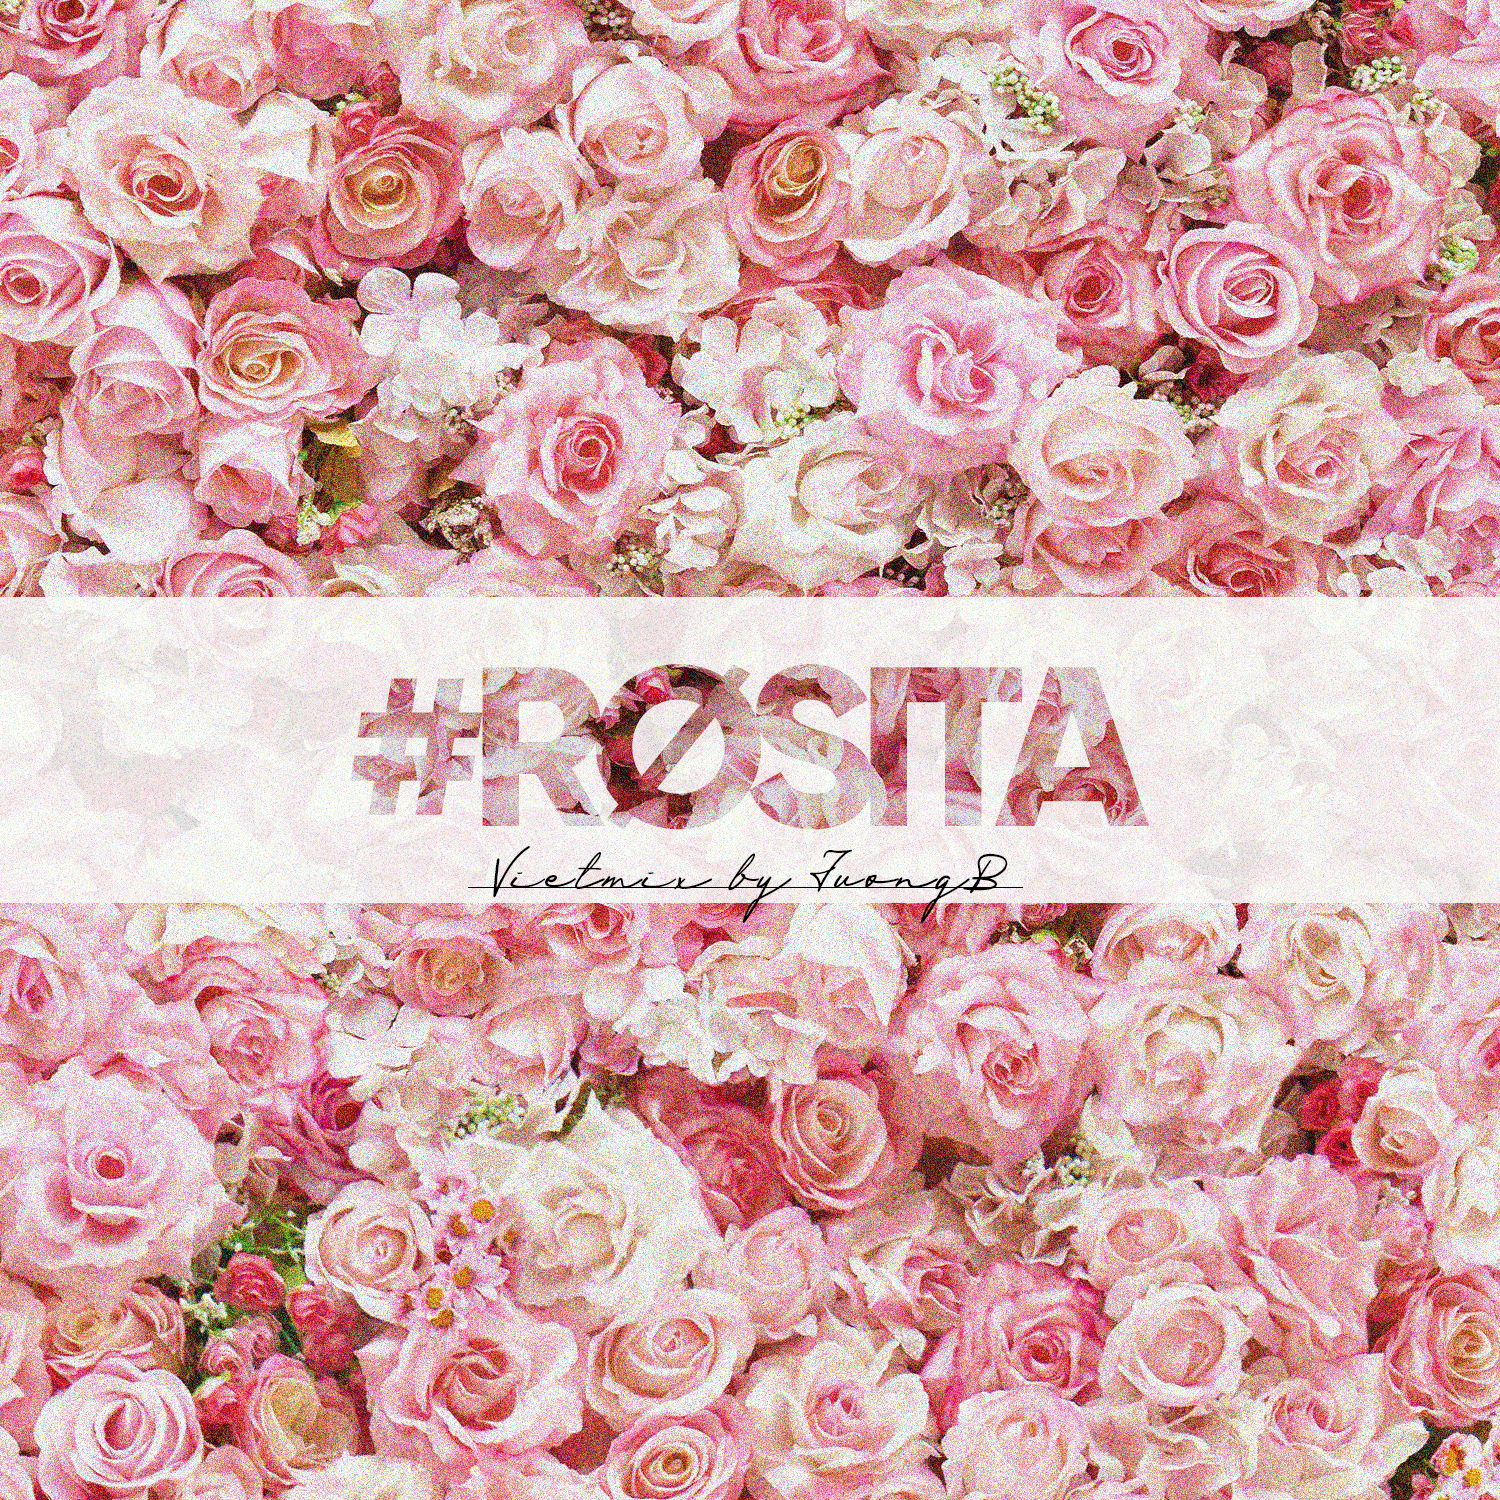 Soo dejiso #Rosita - Vietmix By JuongB